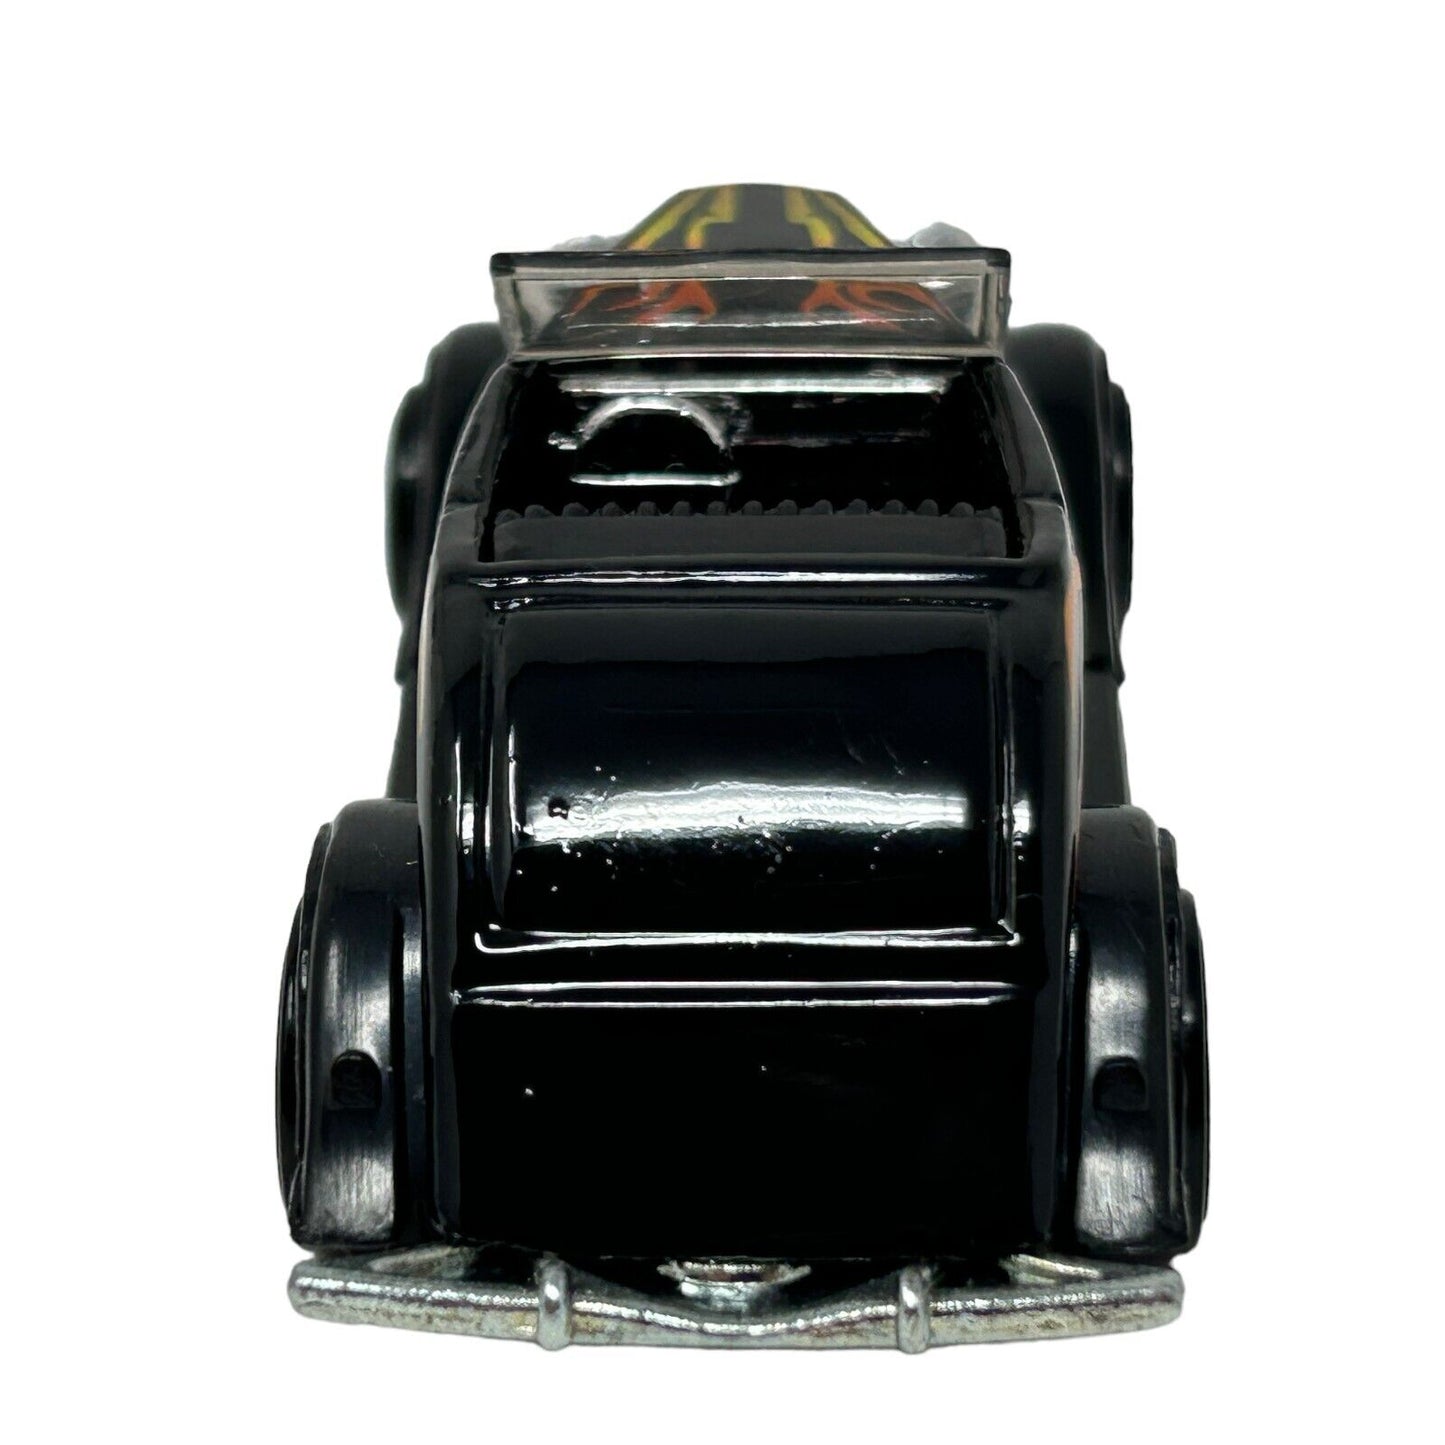 1933 Ford Roadster Hot Wheels Collectible Diecast Car Black Vintage Y2Ks Vehicle